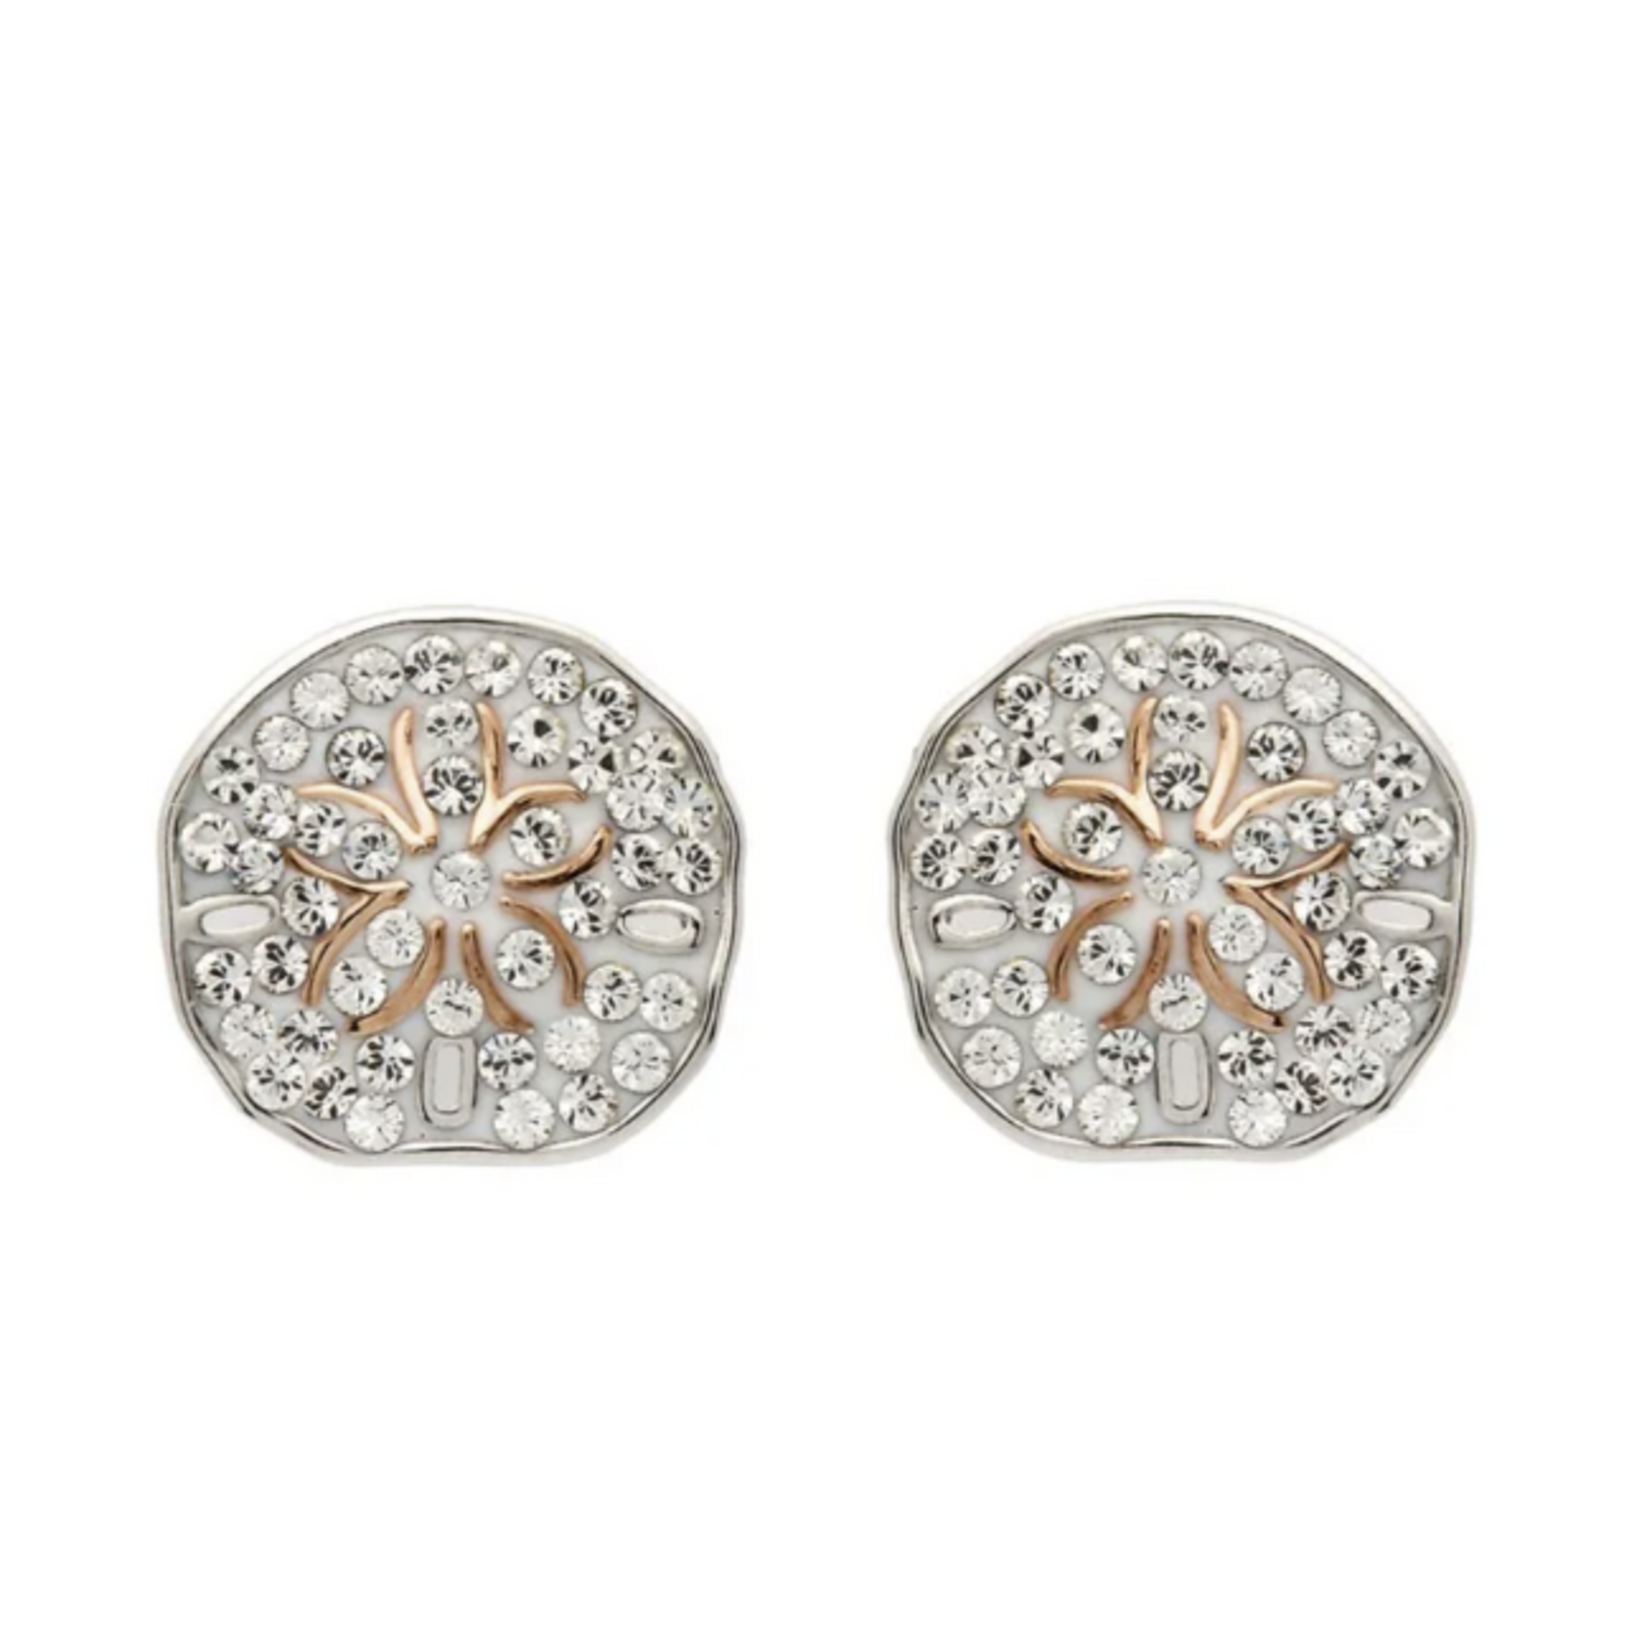 Shanore S/s Sand Dollar Stud Earrings - Swarovski Crystal